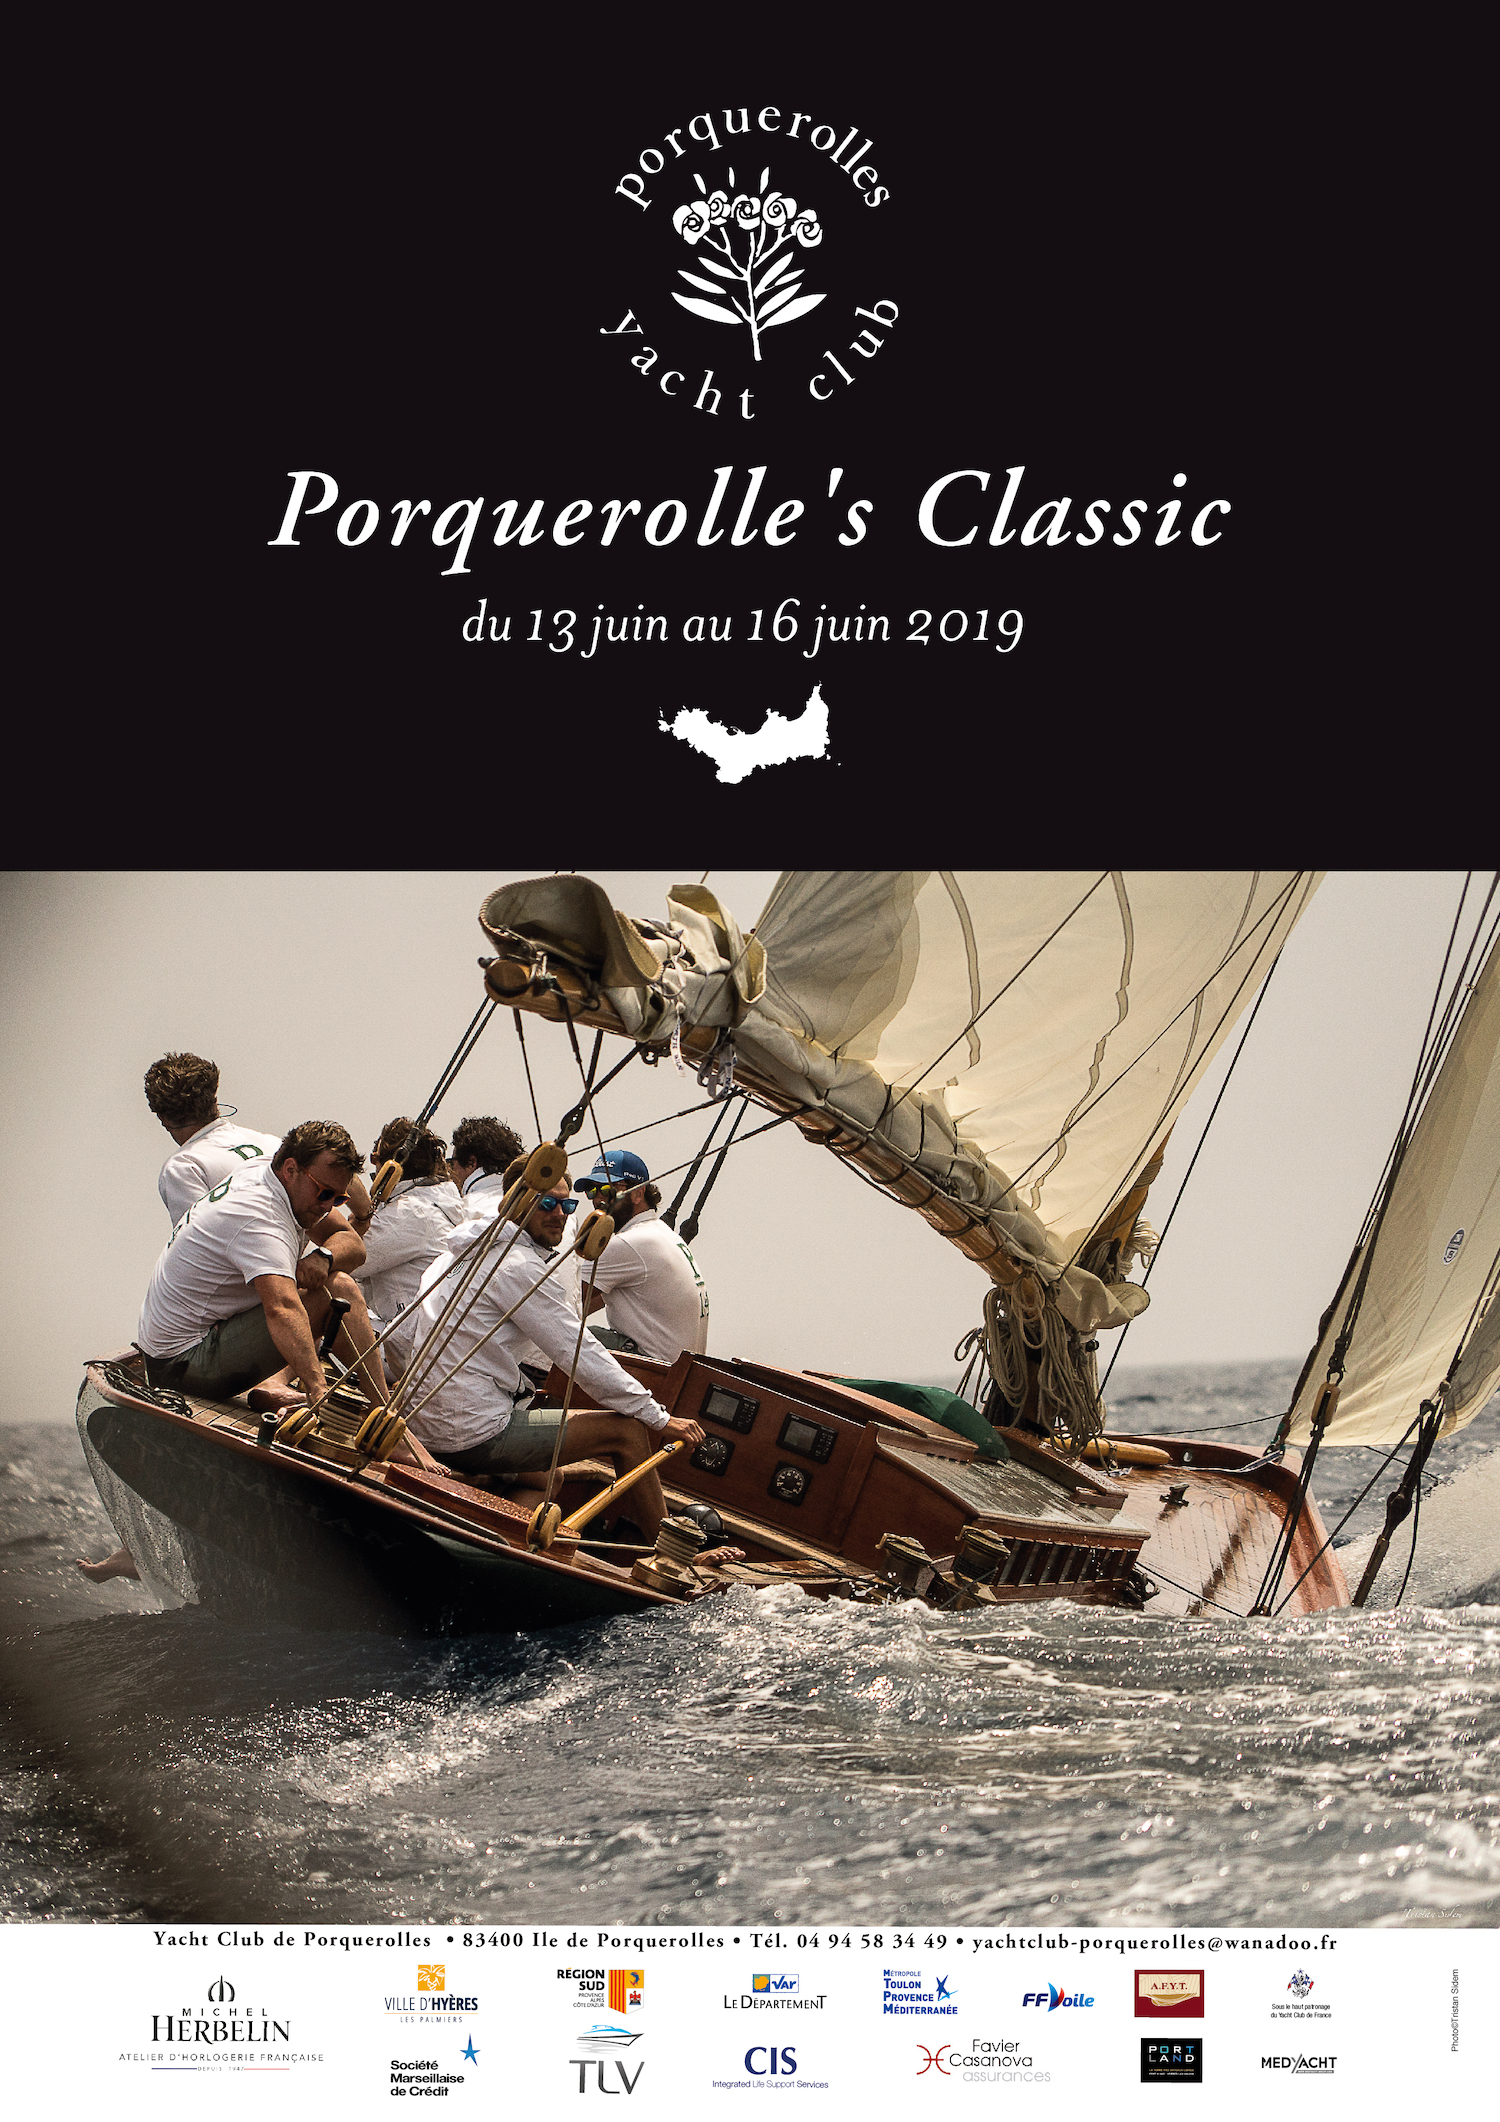 l’horloger français MICHEL HERBELIN, partenaire de la Porquerolle’s Classic depuis cinq ans – 13 – 16 juin 2019